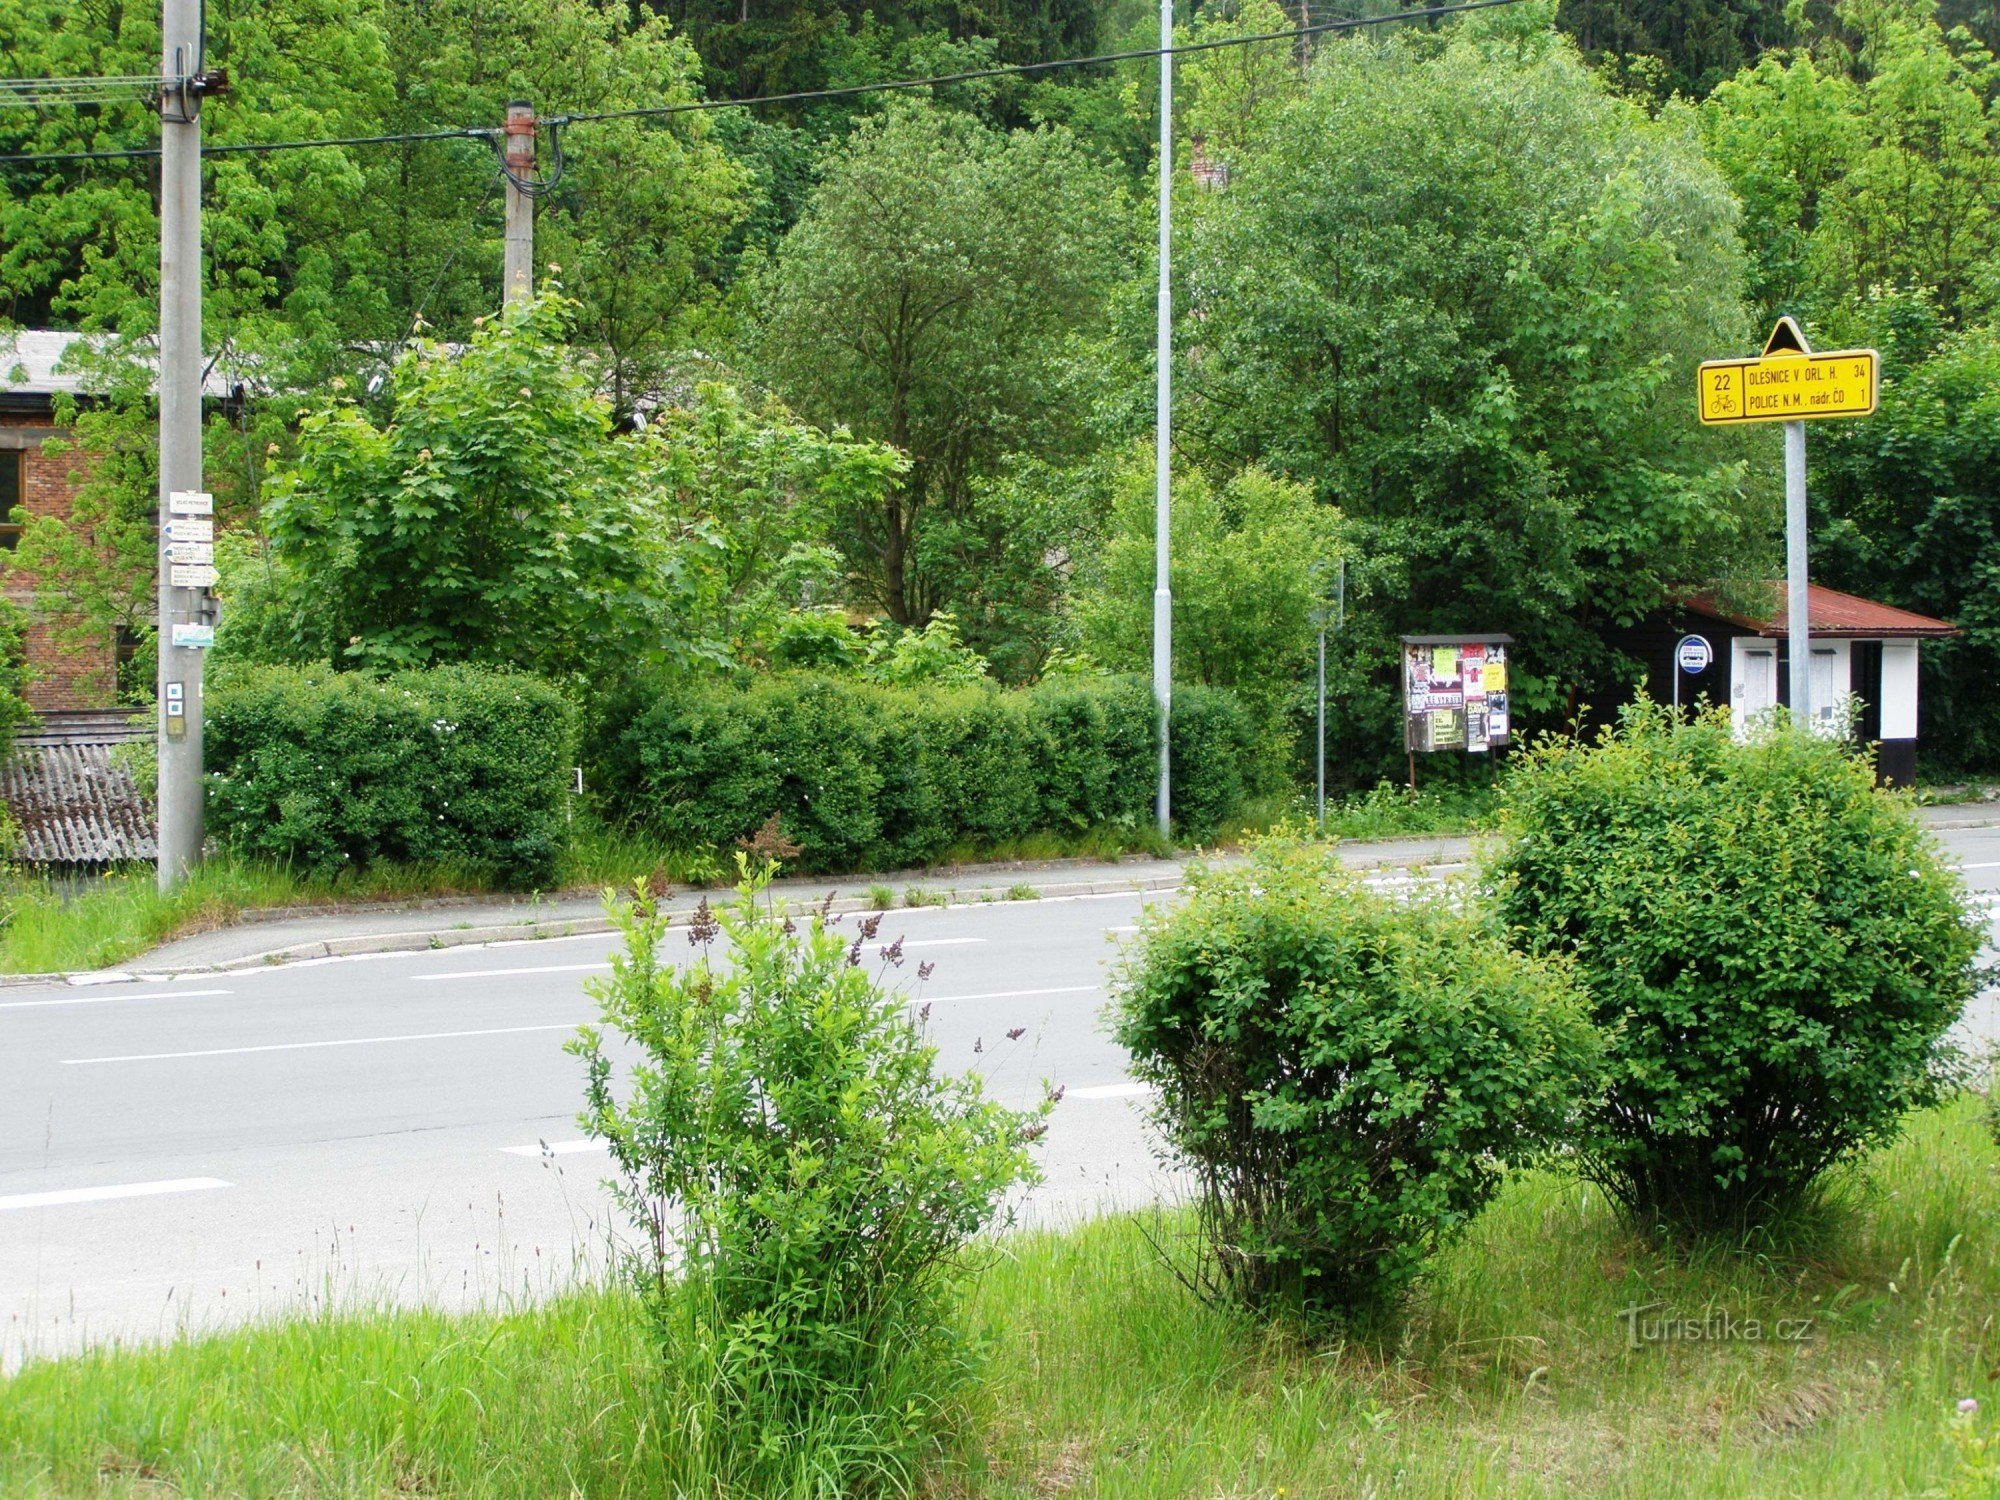 Velké Petrovice の観光交差点 - バス